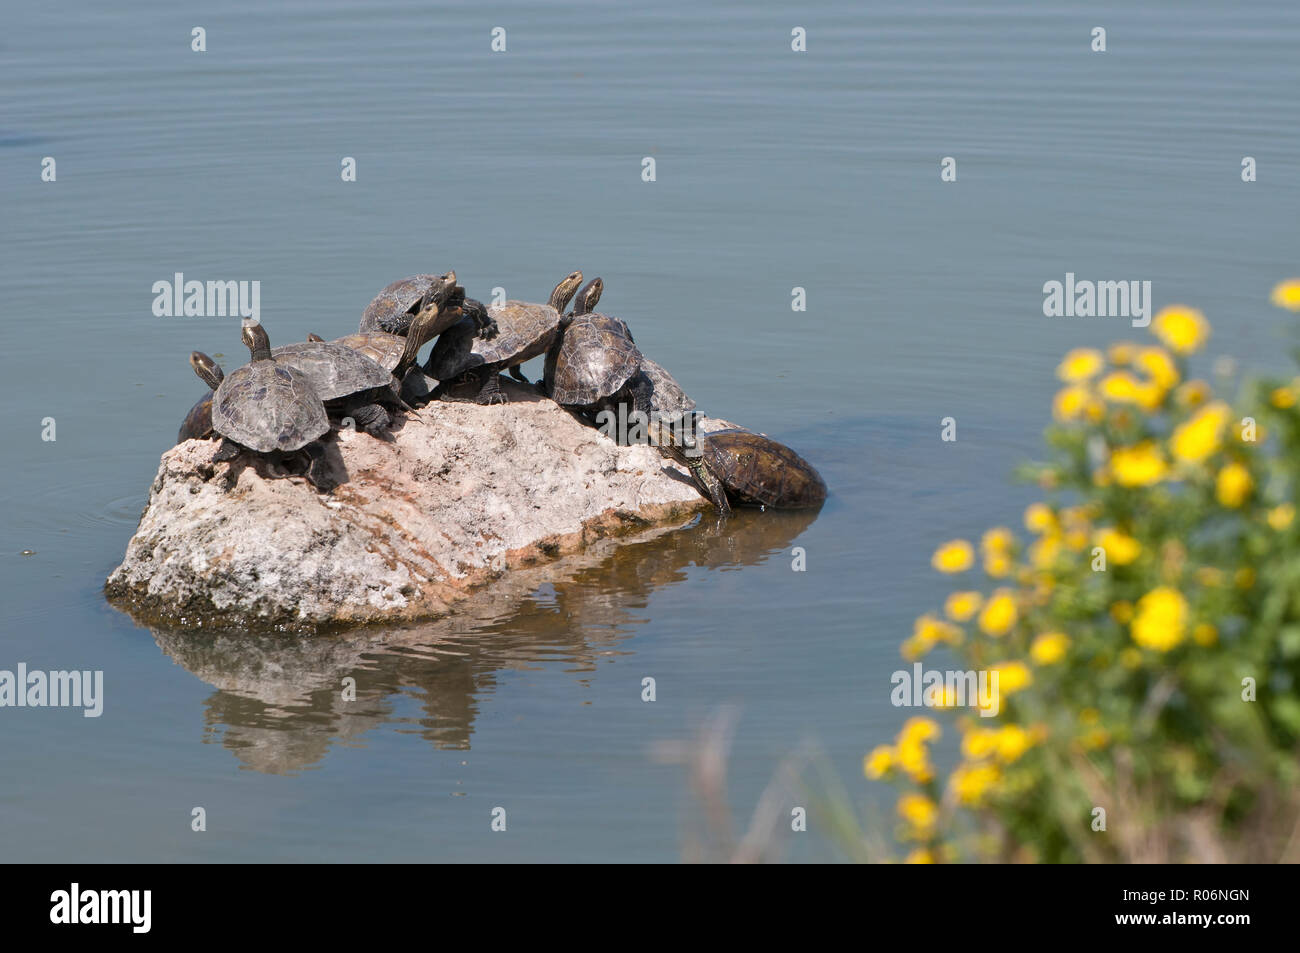 Swamp turtle basking in the sun Stock Photo